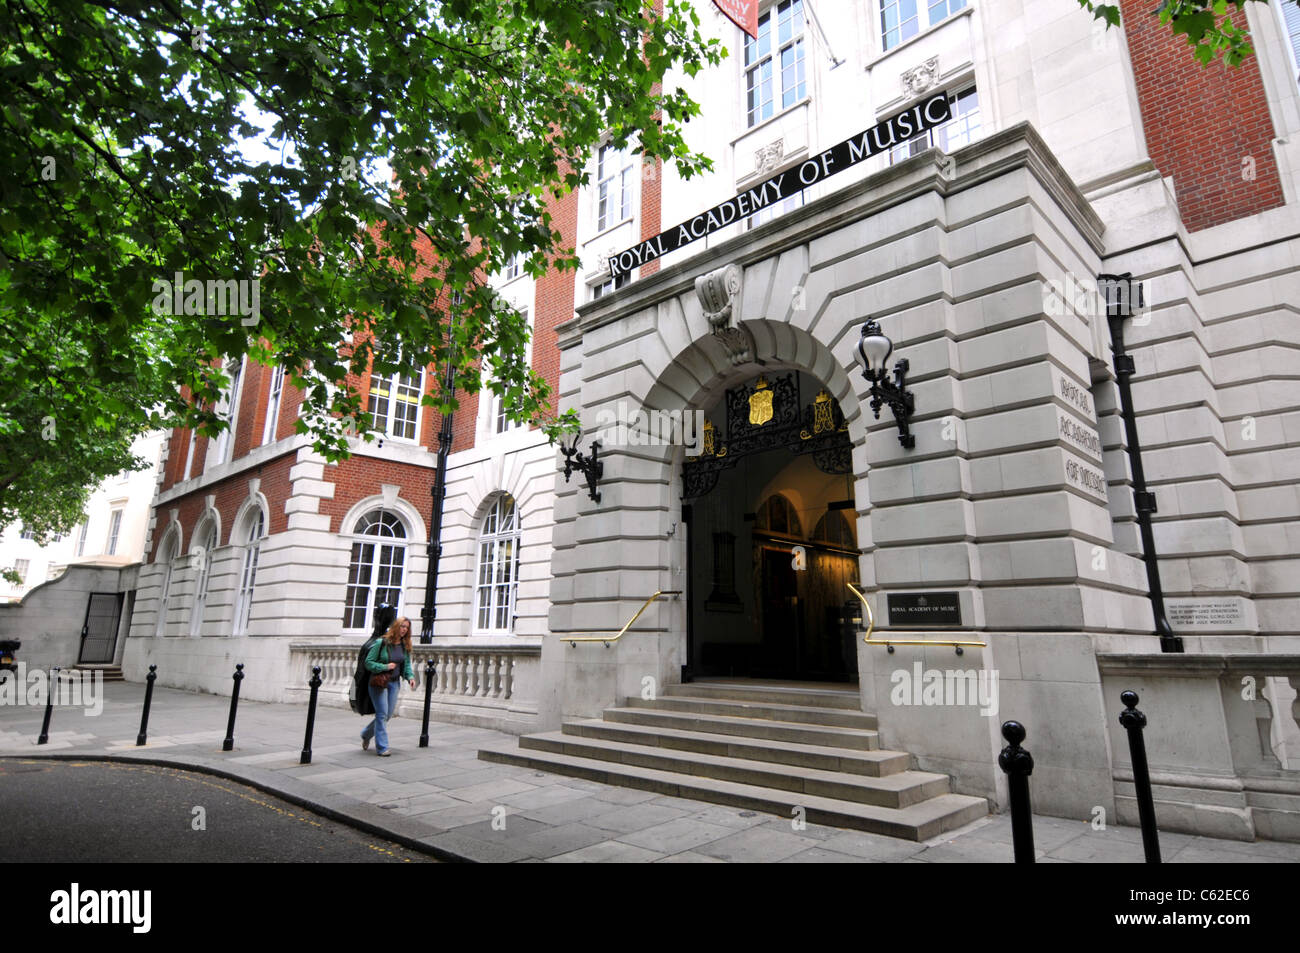 Royal Academy of Music in Marylebone, London, England, UK Stockfoto